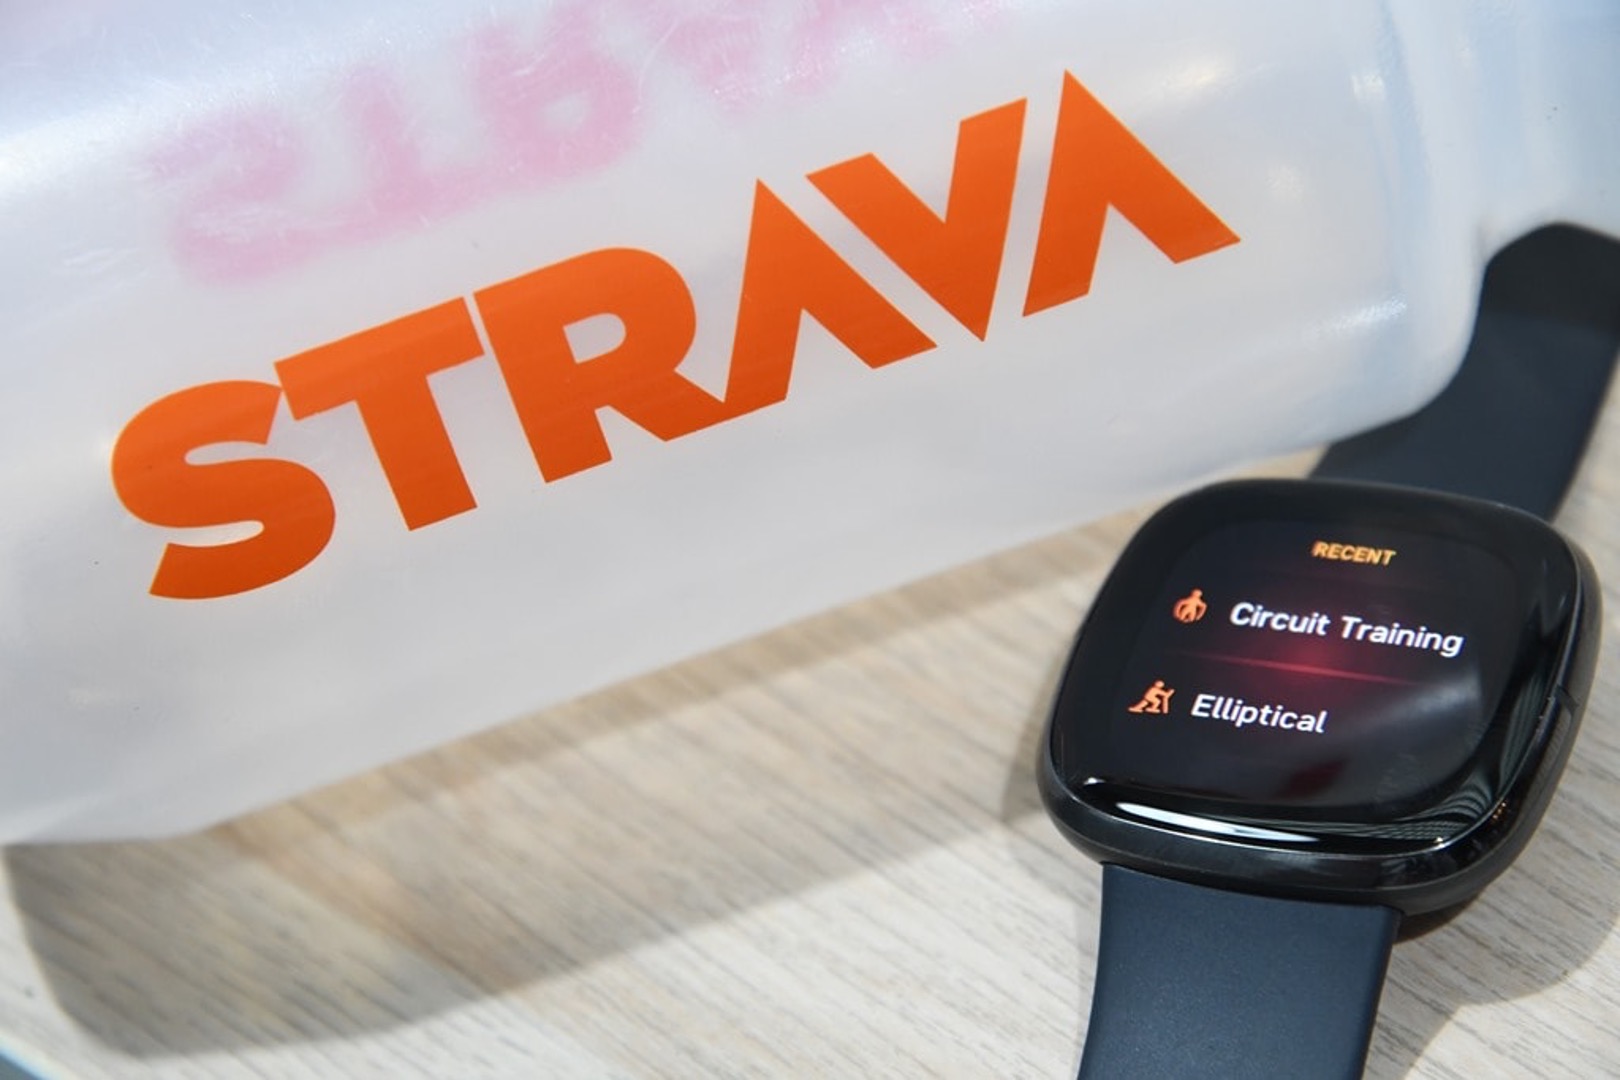 Strava Integration: Using Strava With Fitbit Versa 2